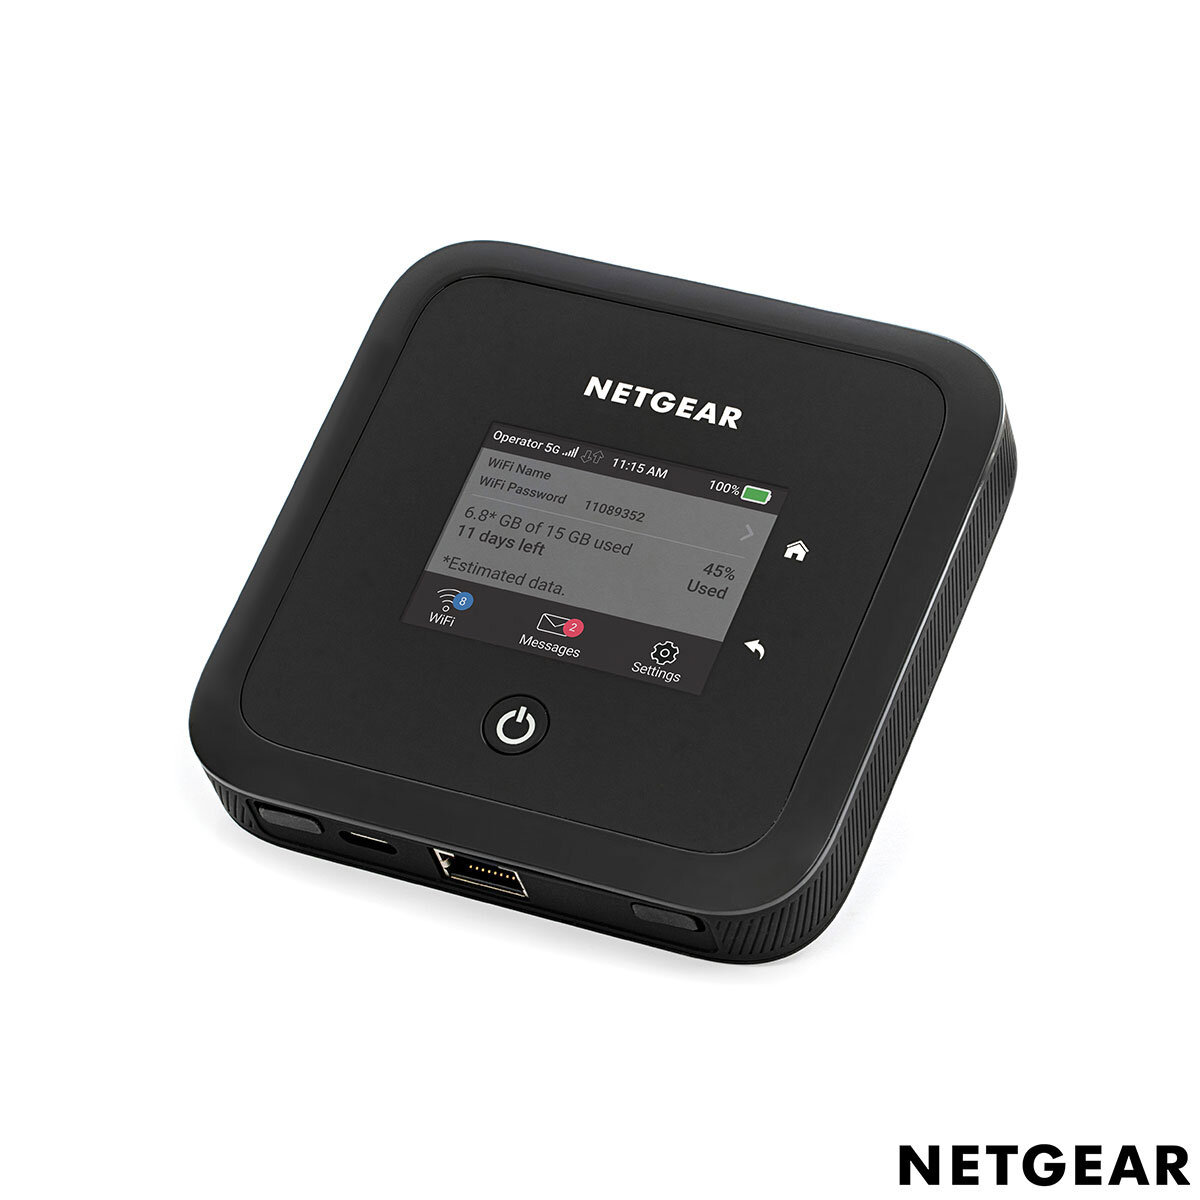 Netgear Nighthawk Aircard Mobile Router MR5200-100EUS 